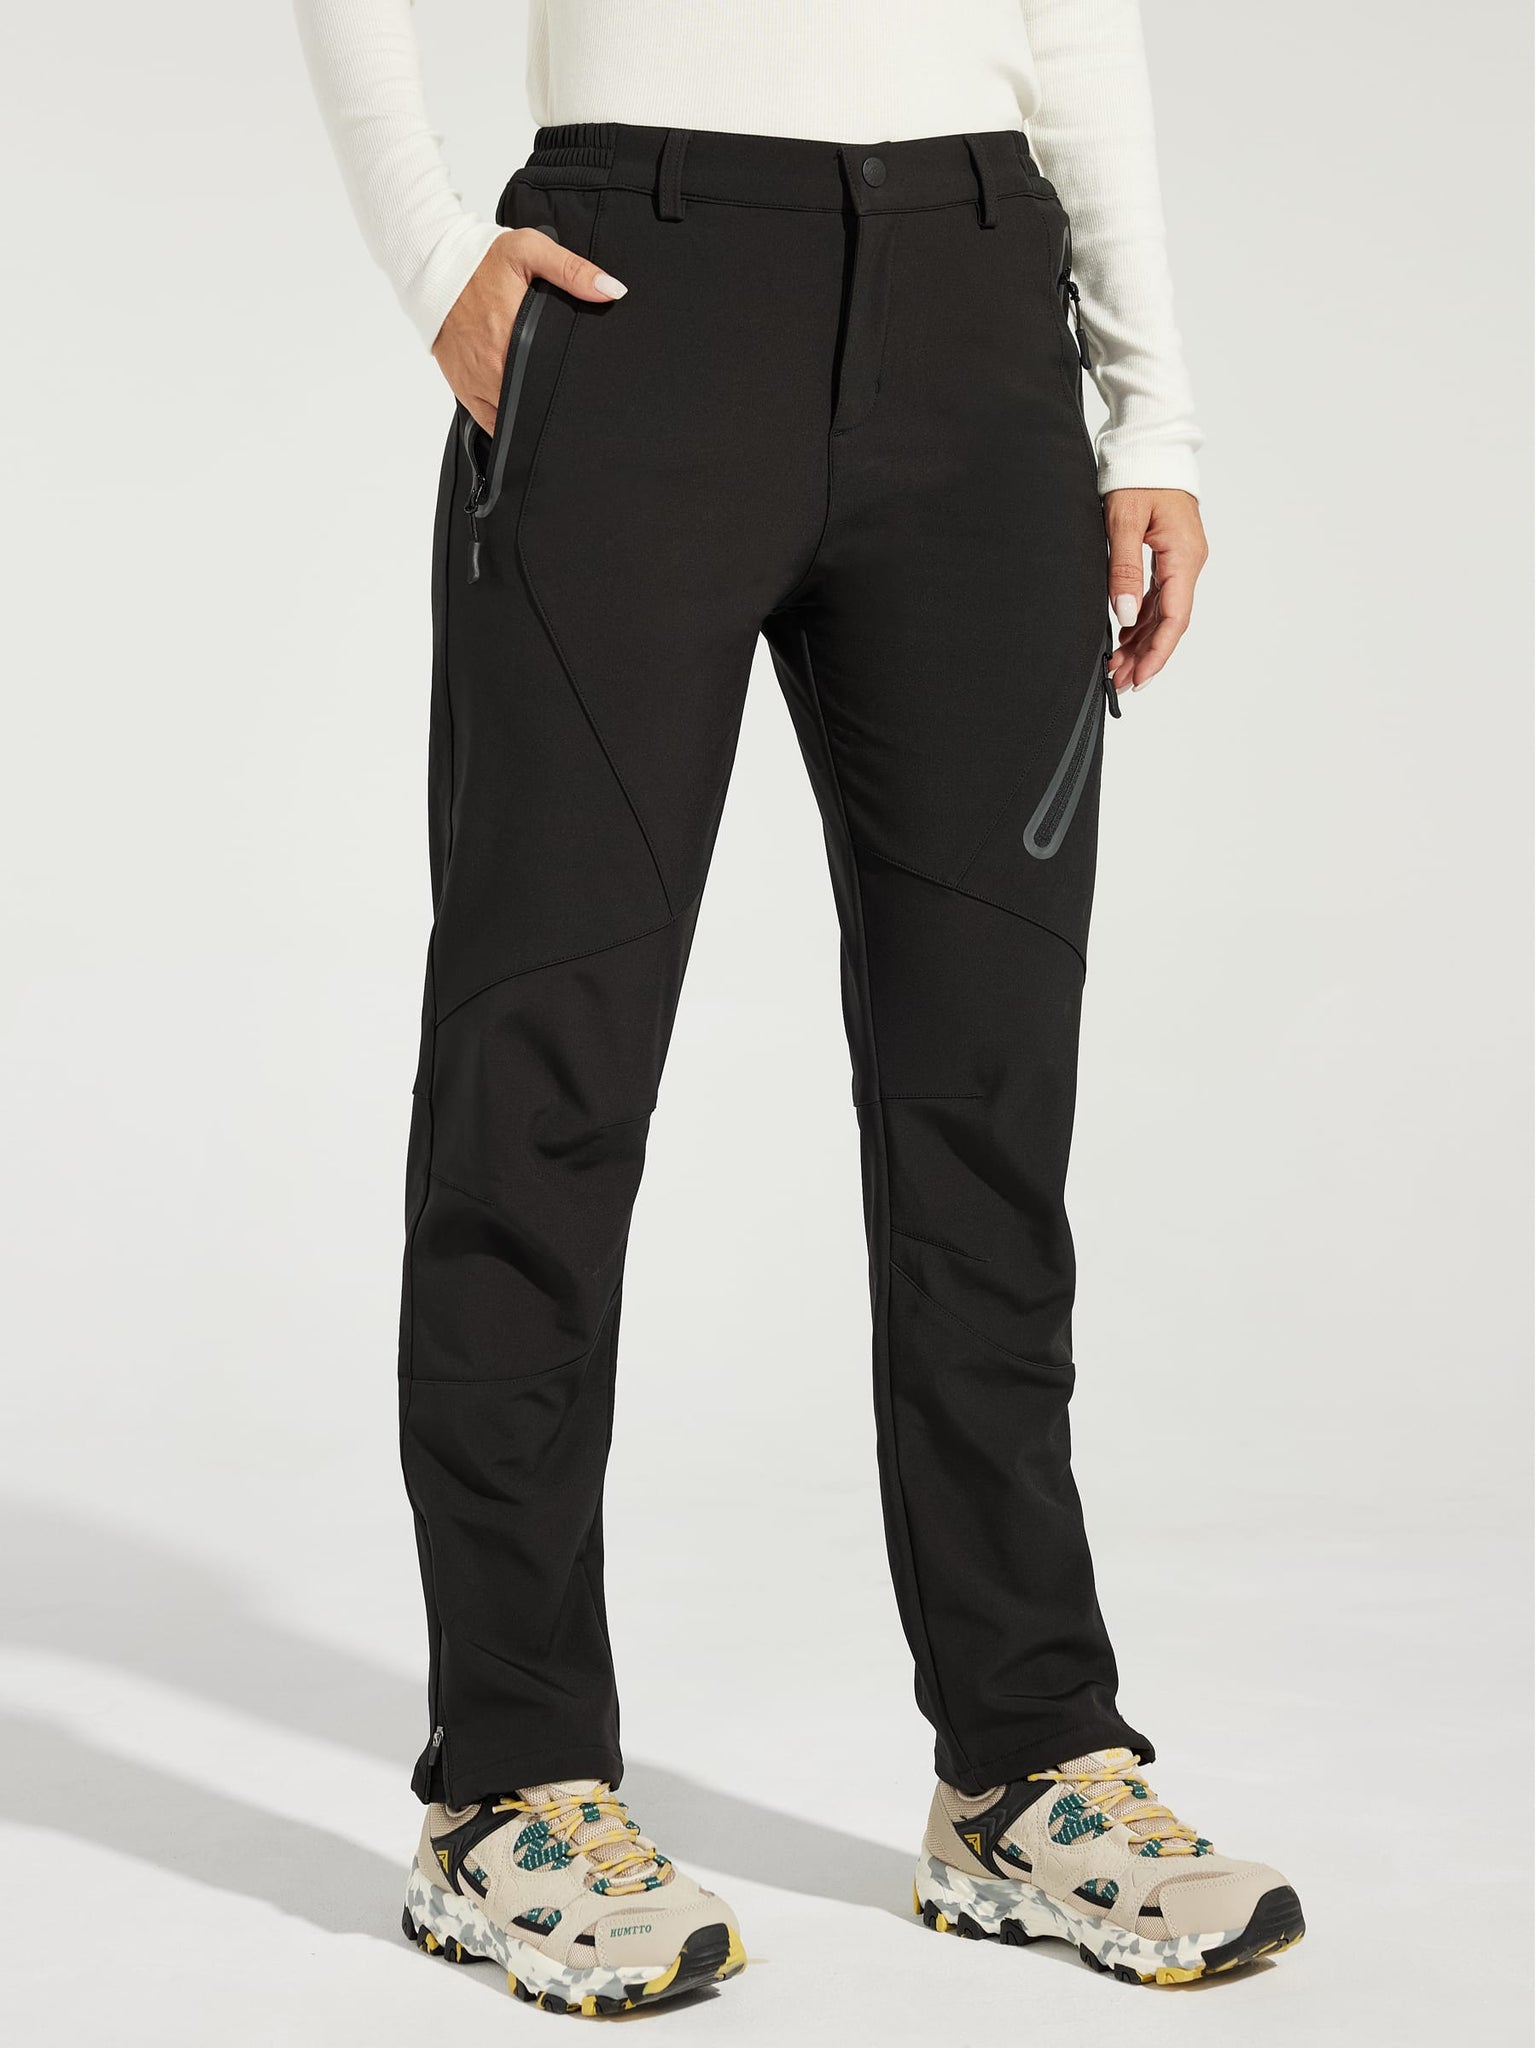 Women's Fleece Lined Snow Cargo Pants_Black_model1